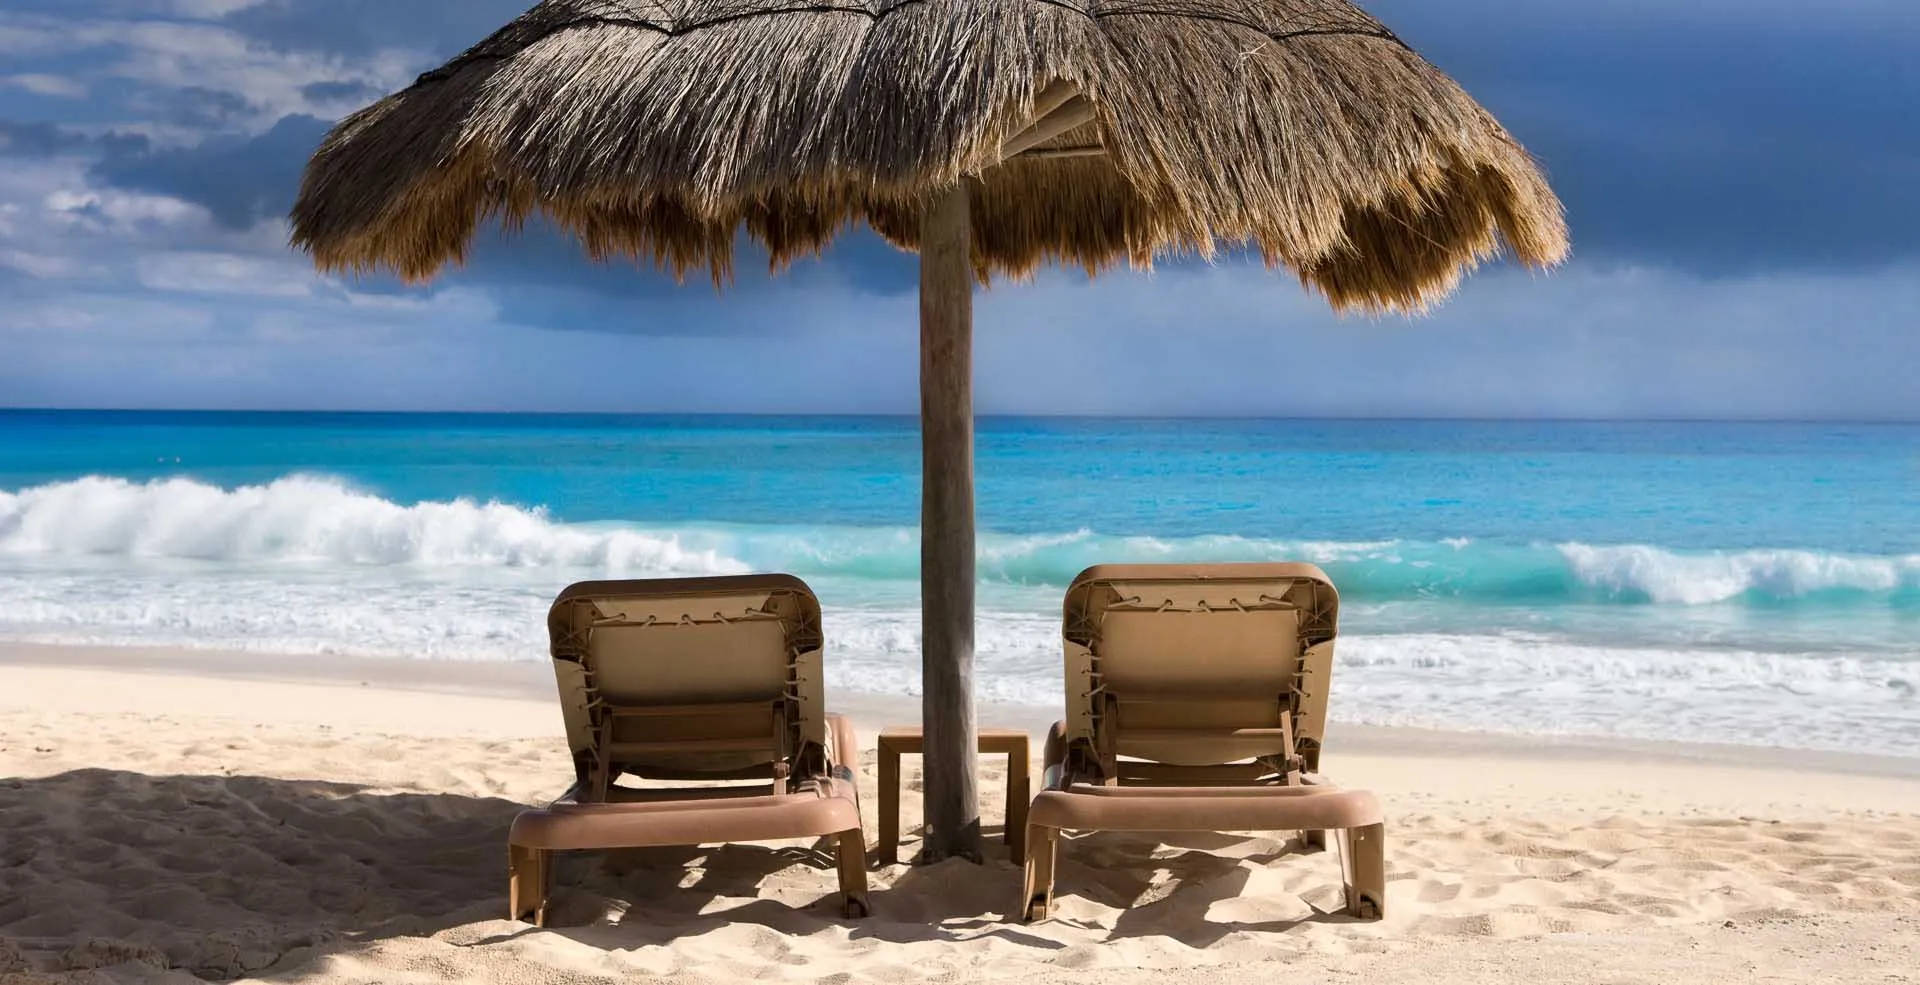 Nota sobre Cancún: Lanzan promoción especial 2 por 1 en paquetes vacacionales